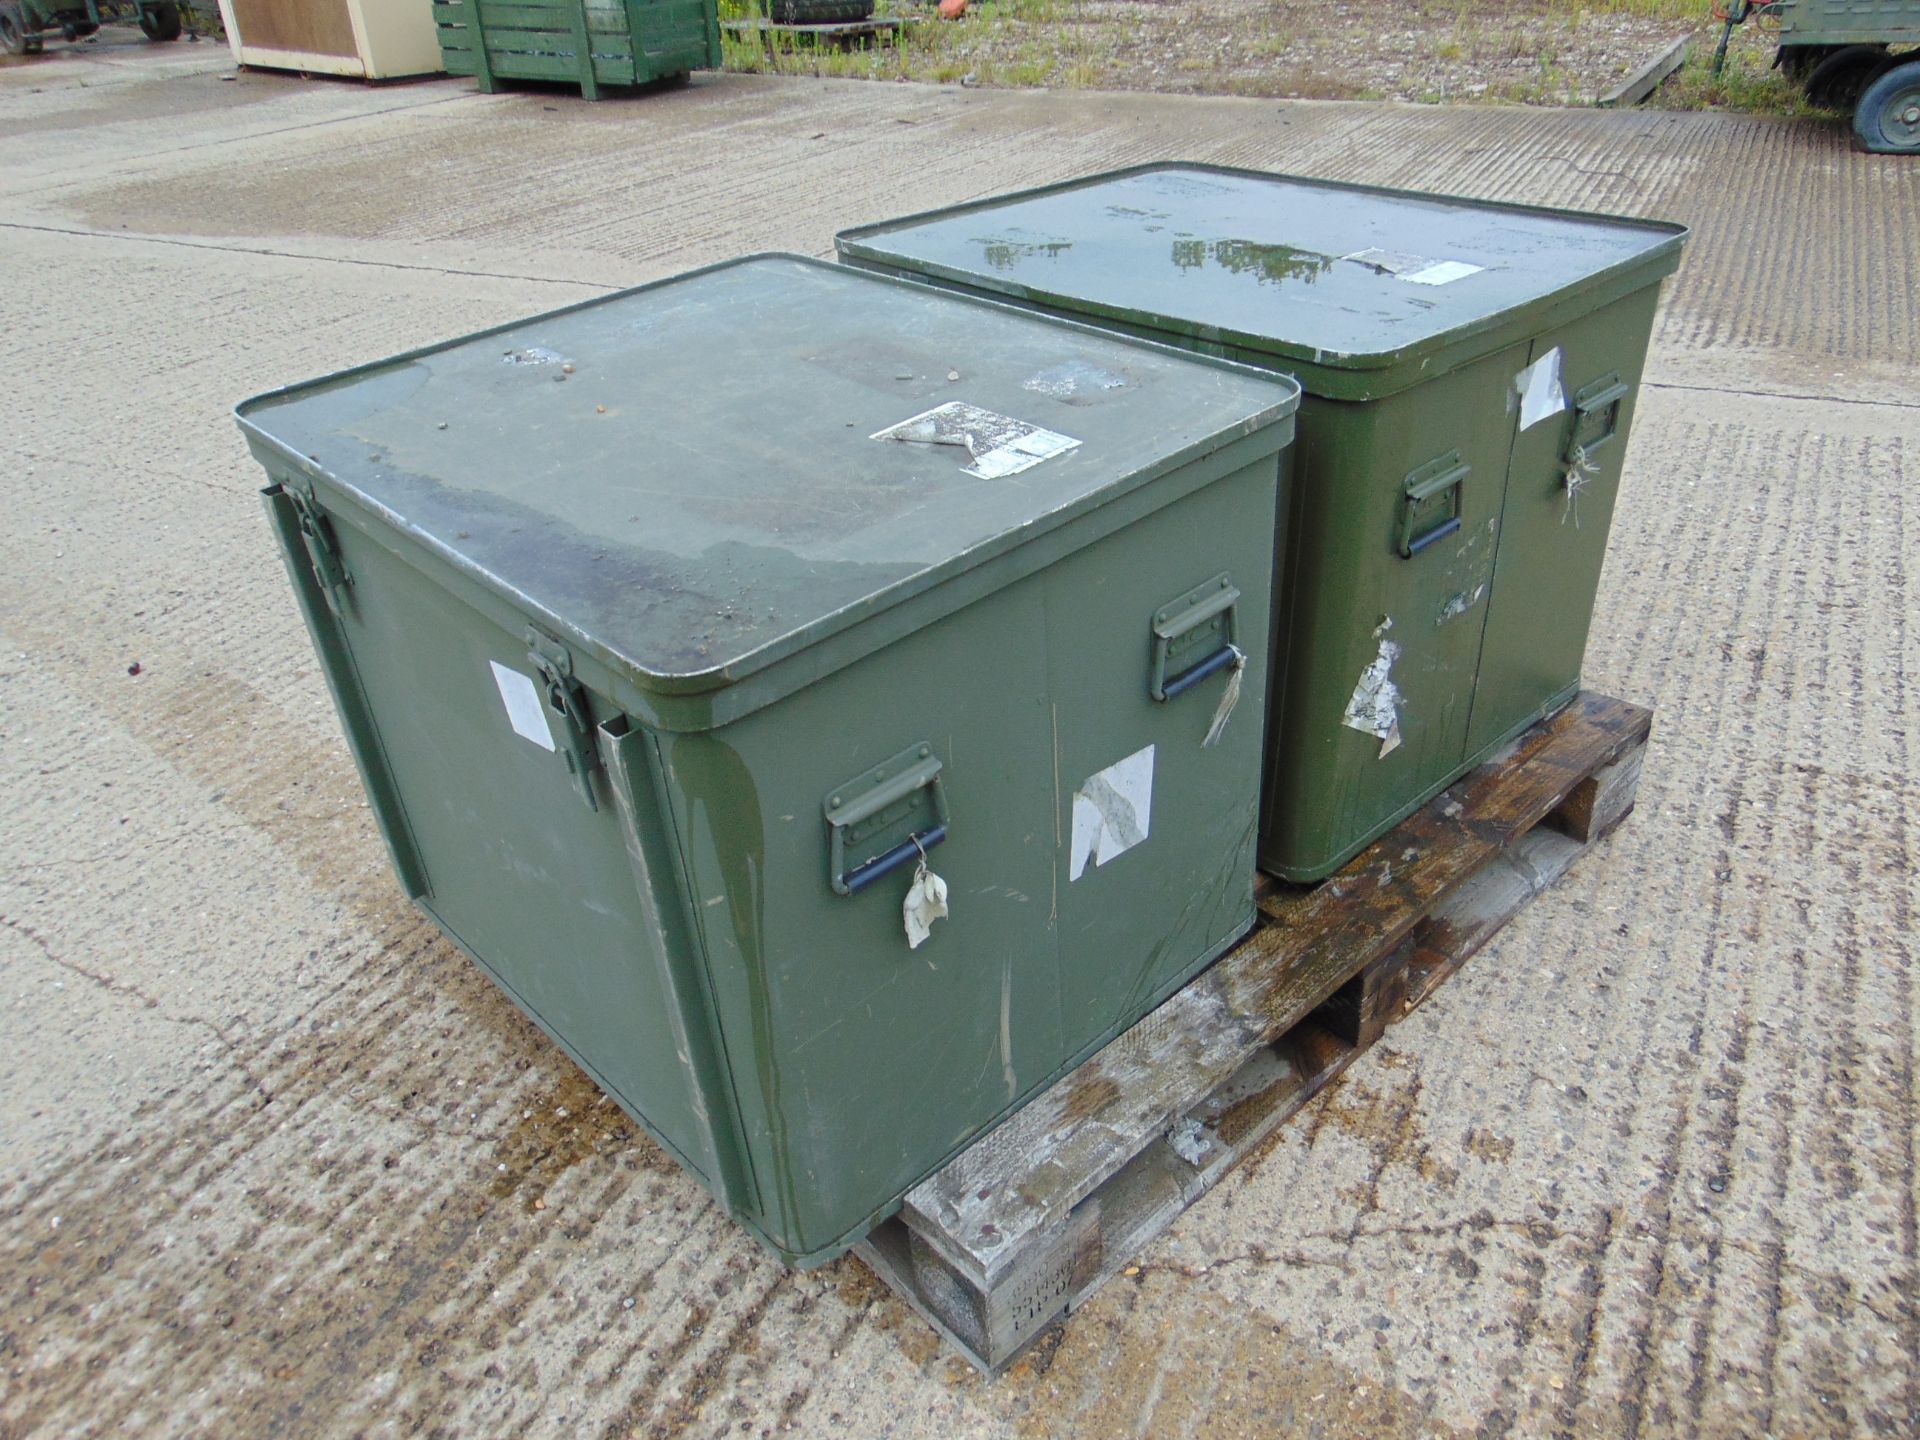 2 x Large Aluminium Storage Boxes 78 x 65 x 60 cms as shown